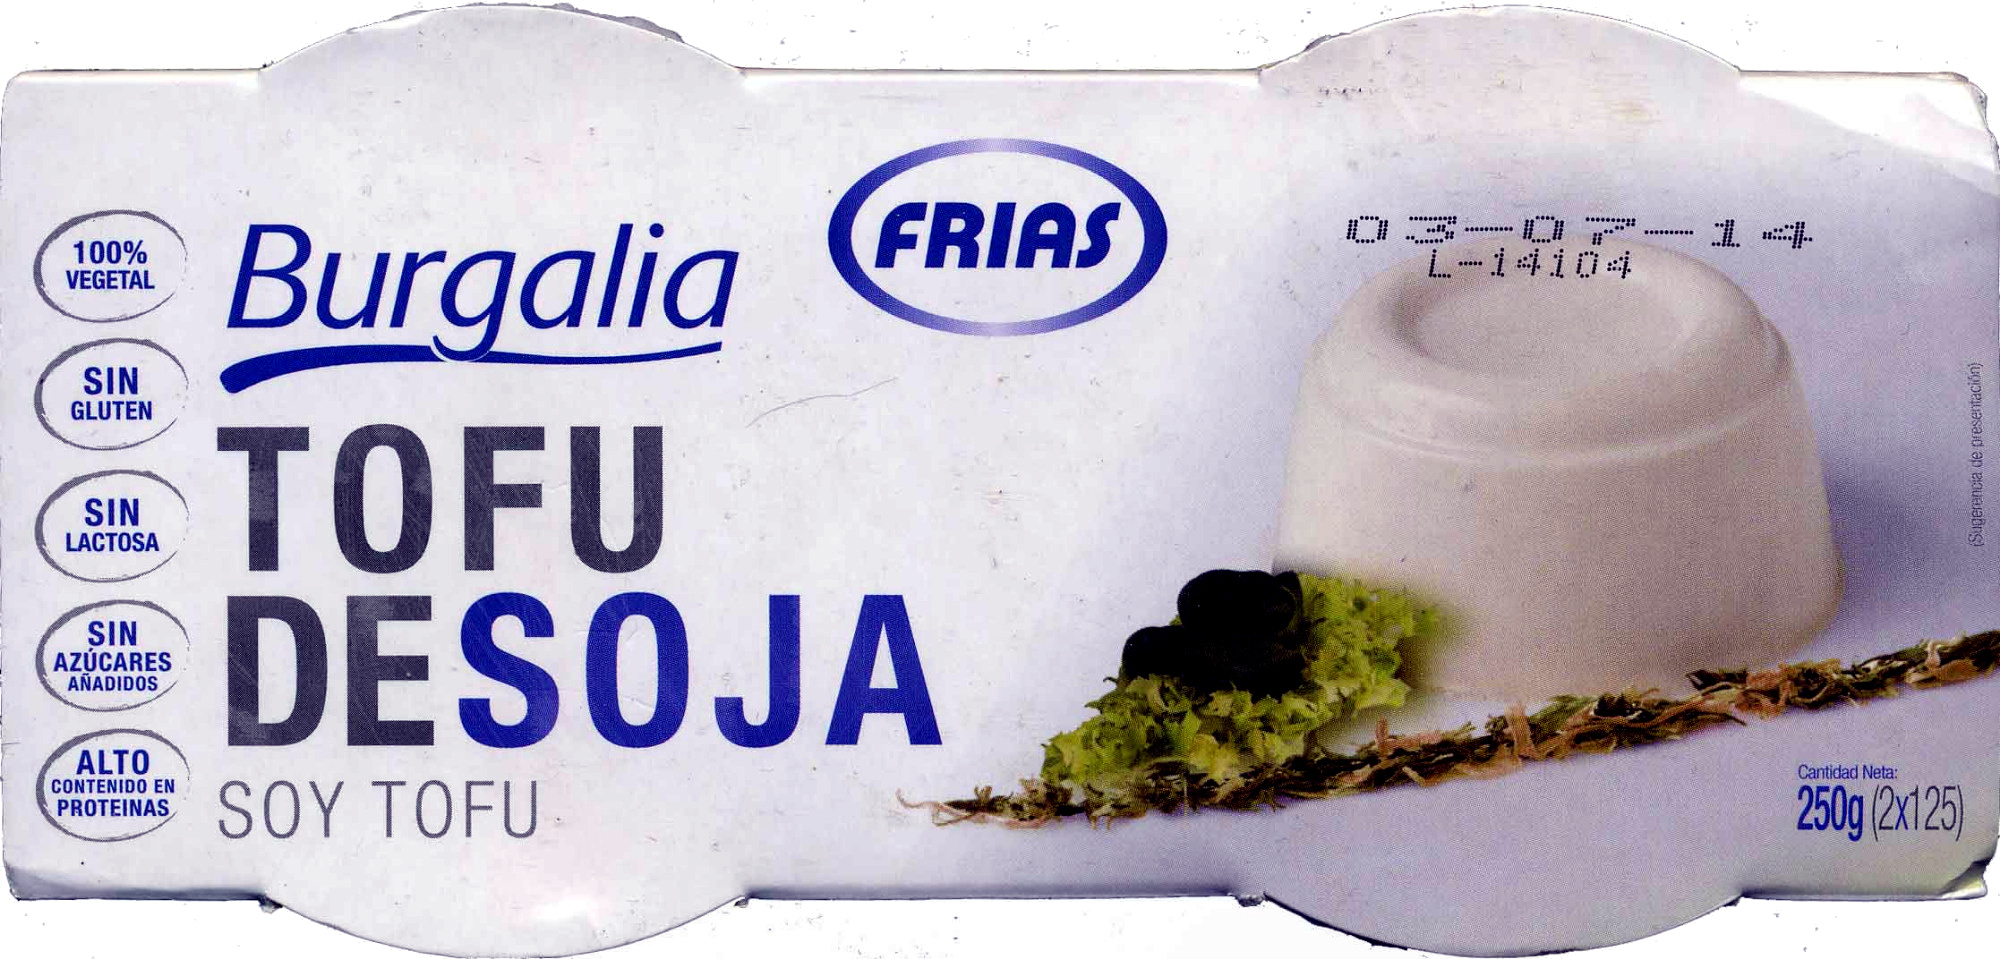 Tofu "Burgalia" "Frías" - Producto